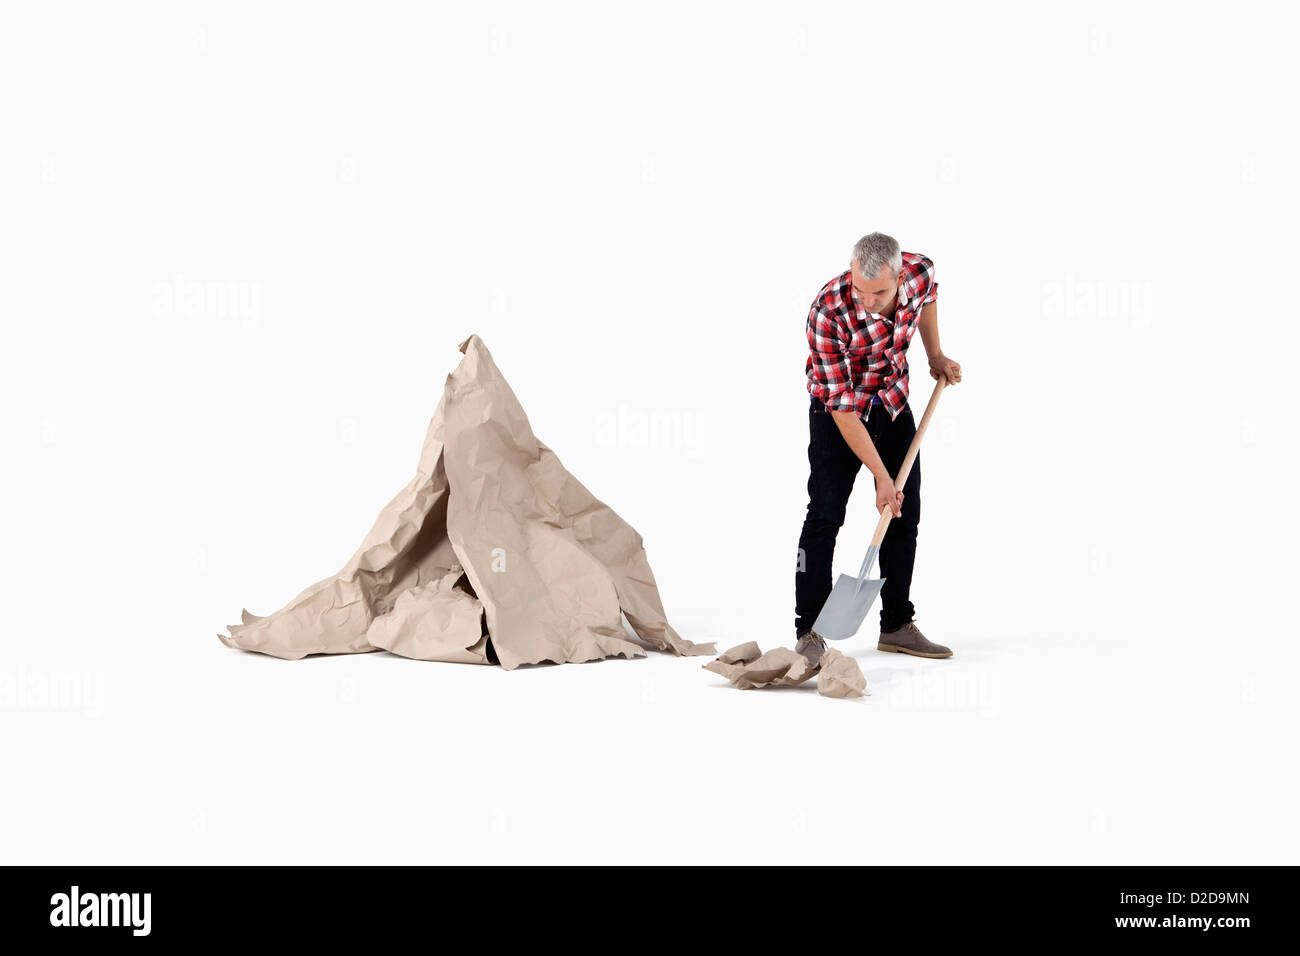 A man digging up construction paper rock, next to an artificial paper boulder Stock Photo